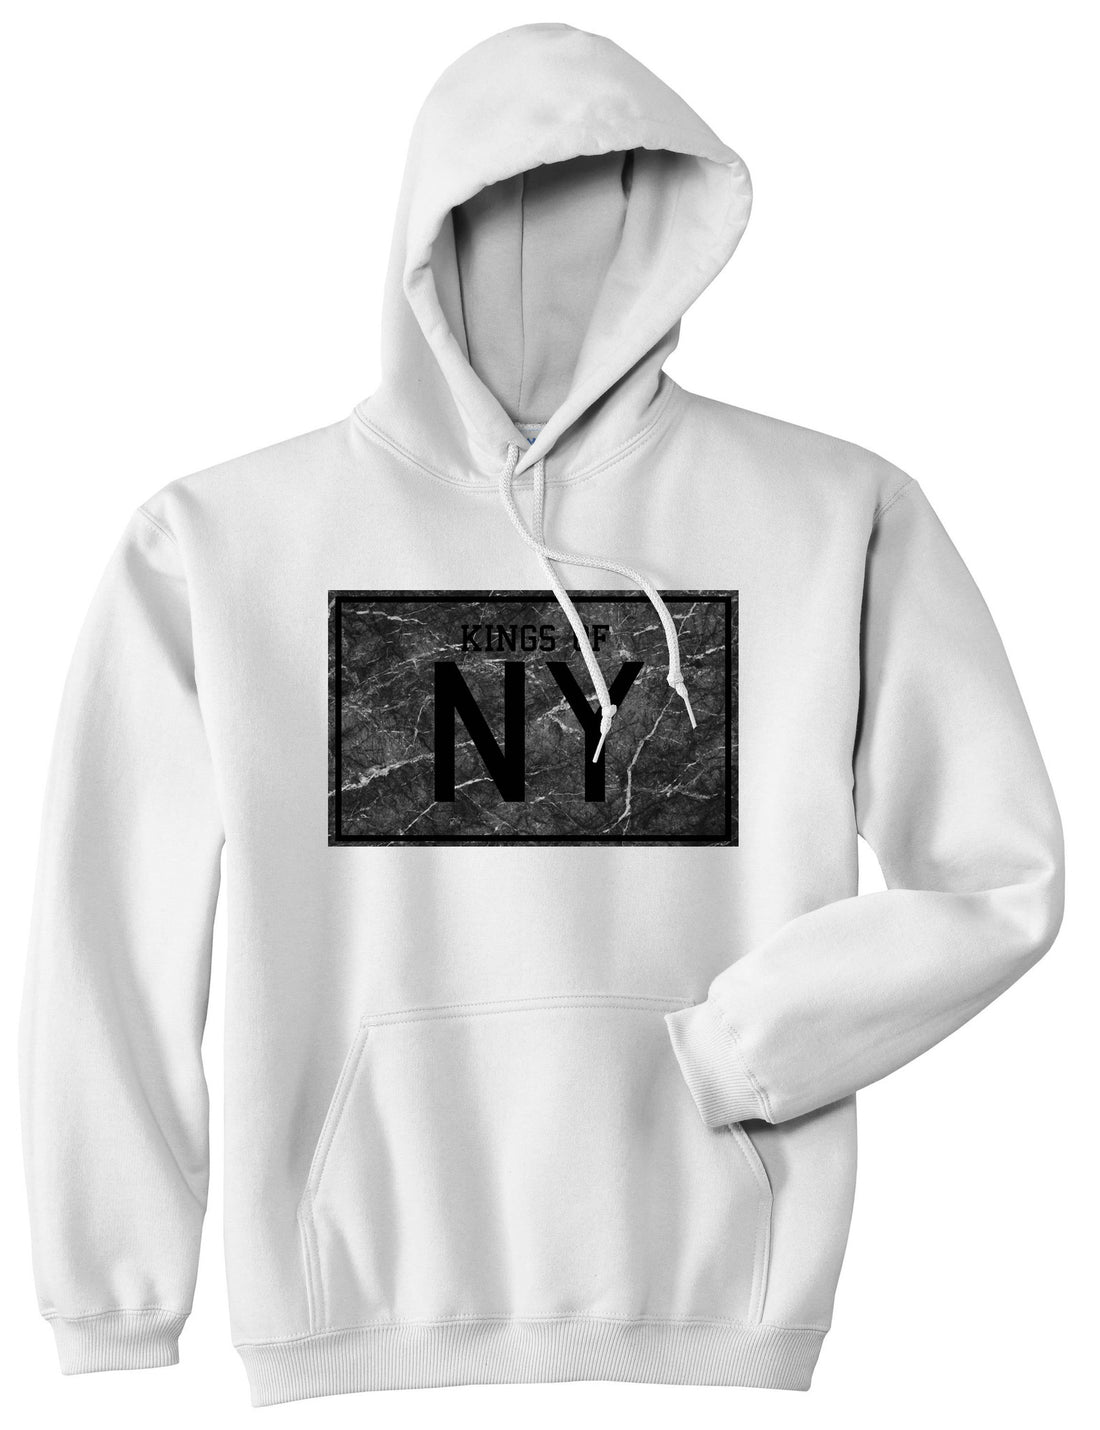 Granite NY Logo Print Pullover Hoodie Hoody in White by Kings Of NY